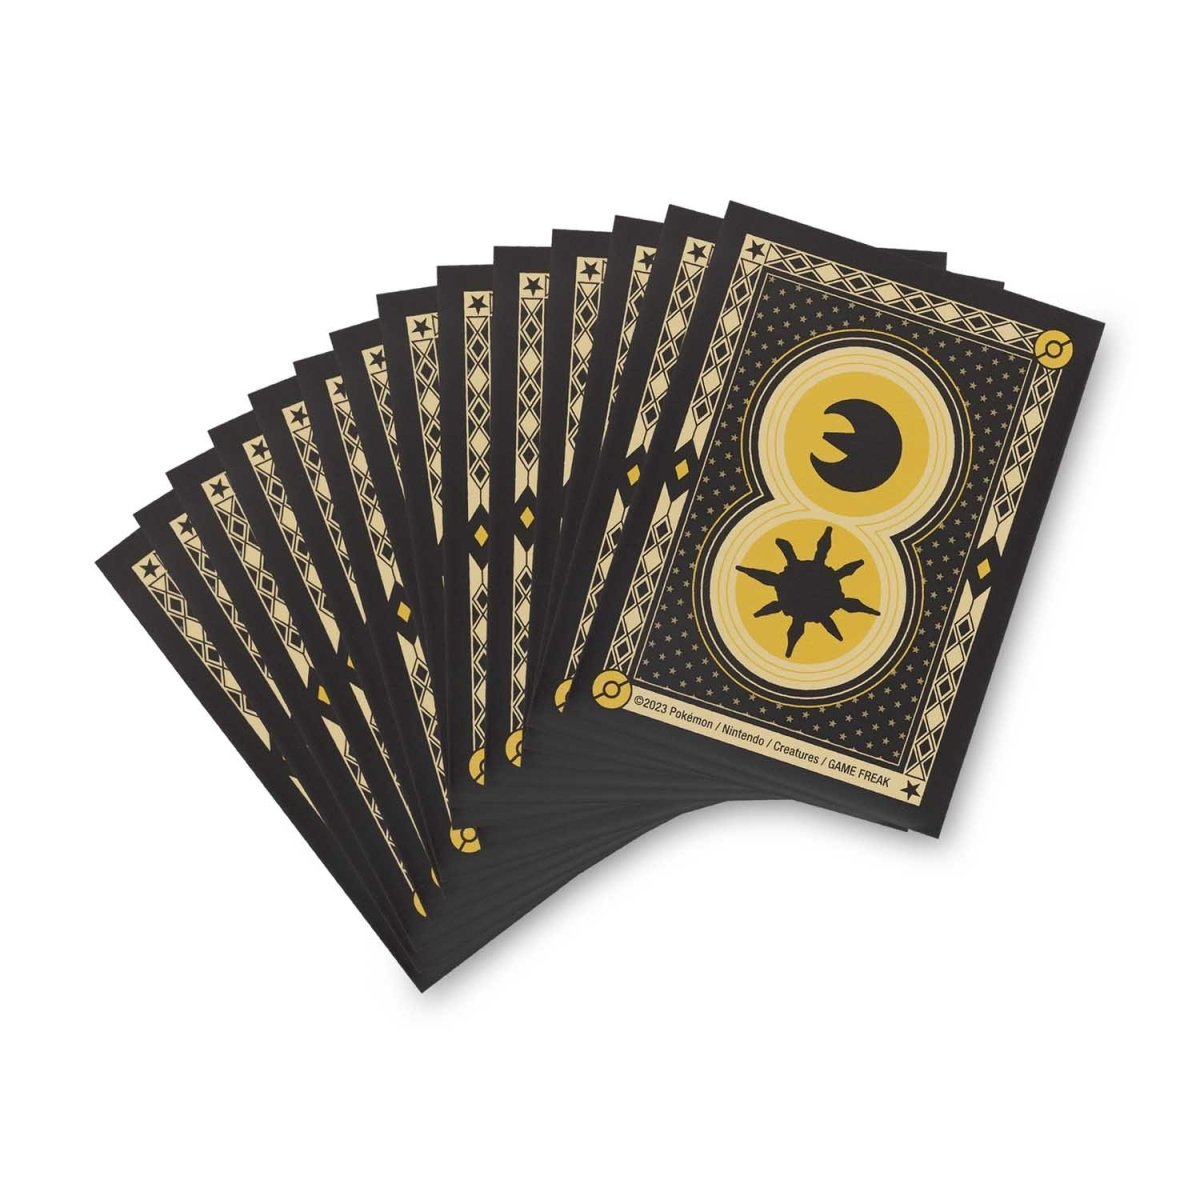 Pokémon TCG "Lunatone & Solrock" Eclipse Card Sleeves